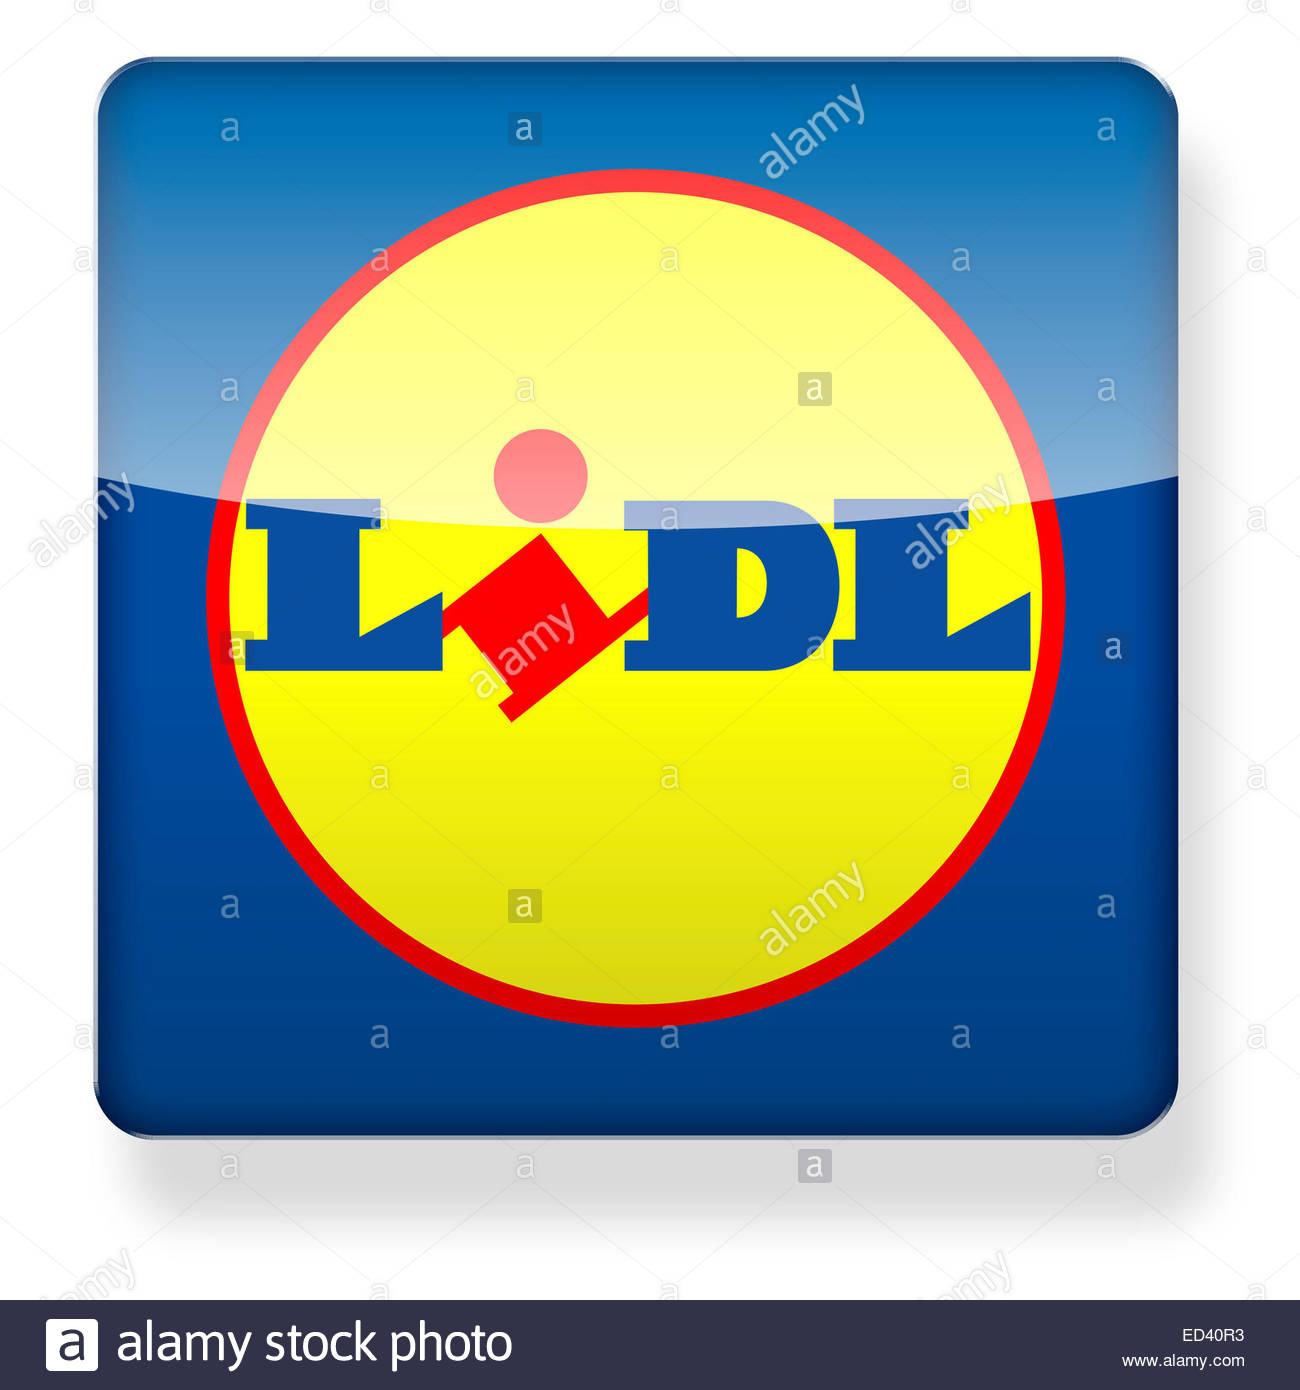 Lidl Logos - roblox app im#U00e1genes de stock roblox app fotos de stock alamy